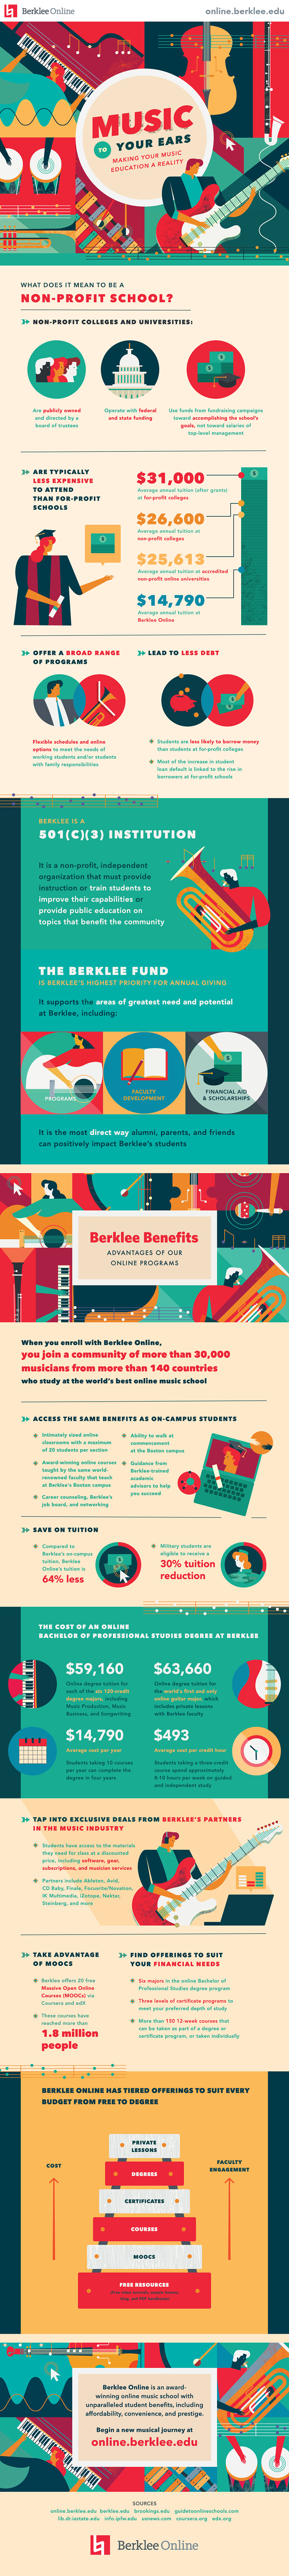 berklee-online-music-education-a-reality